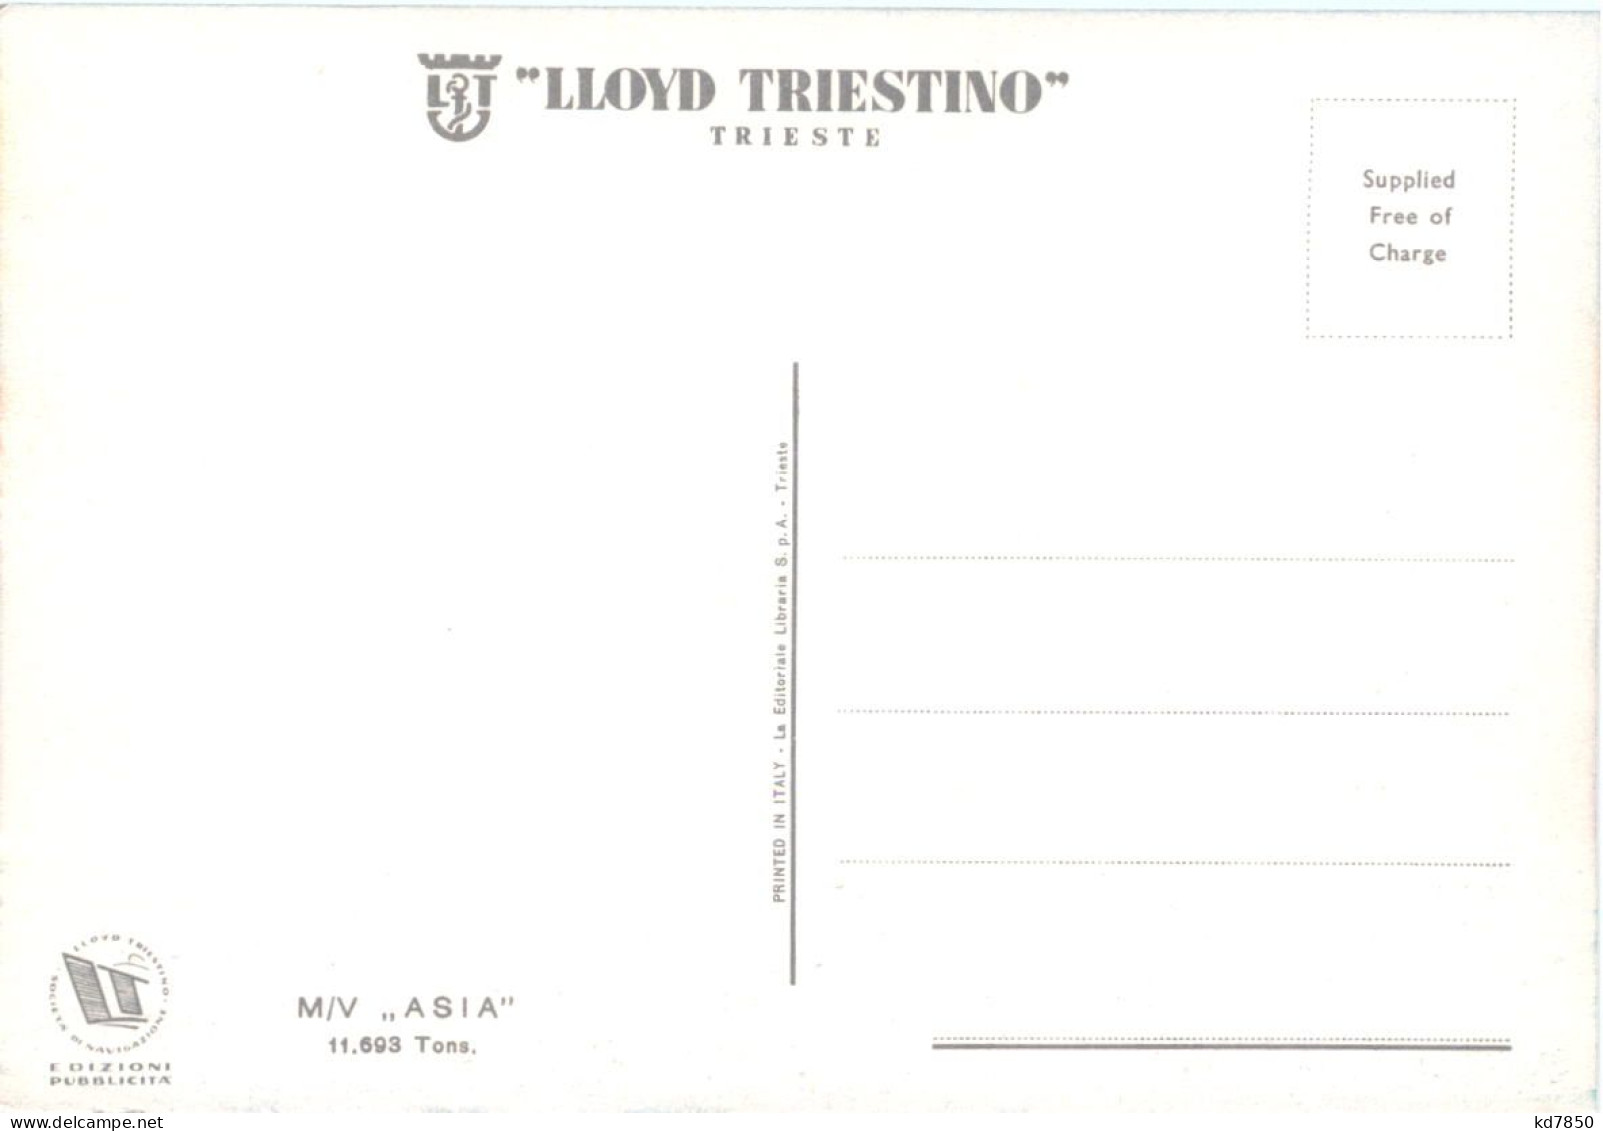 Lloyd Triestino - MN Asia - Steamers